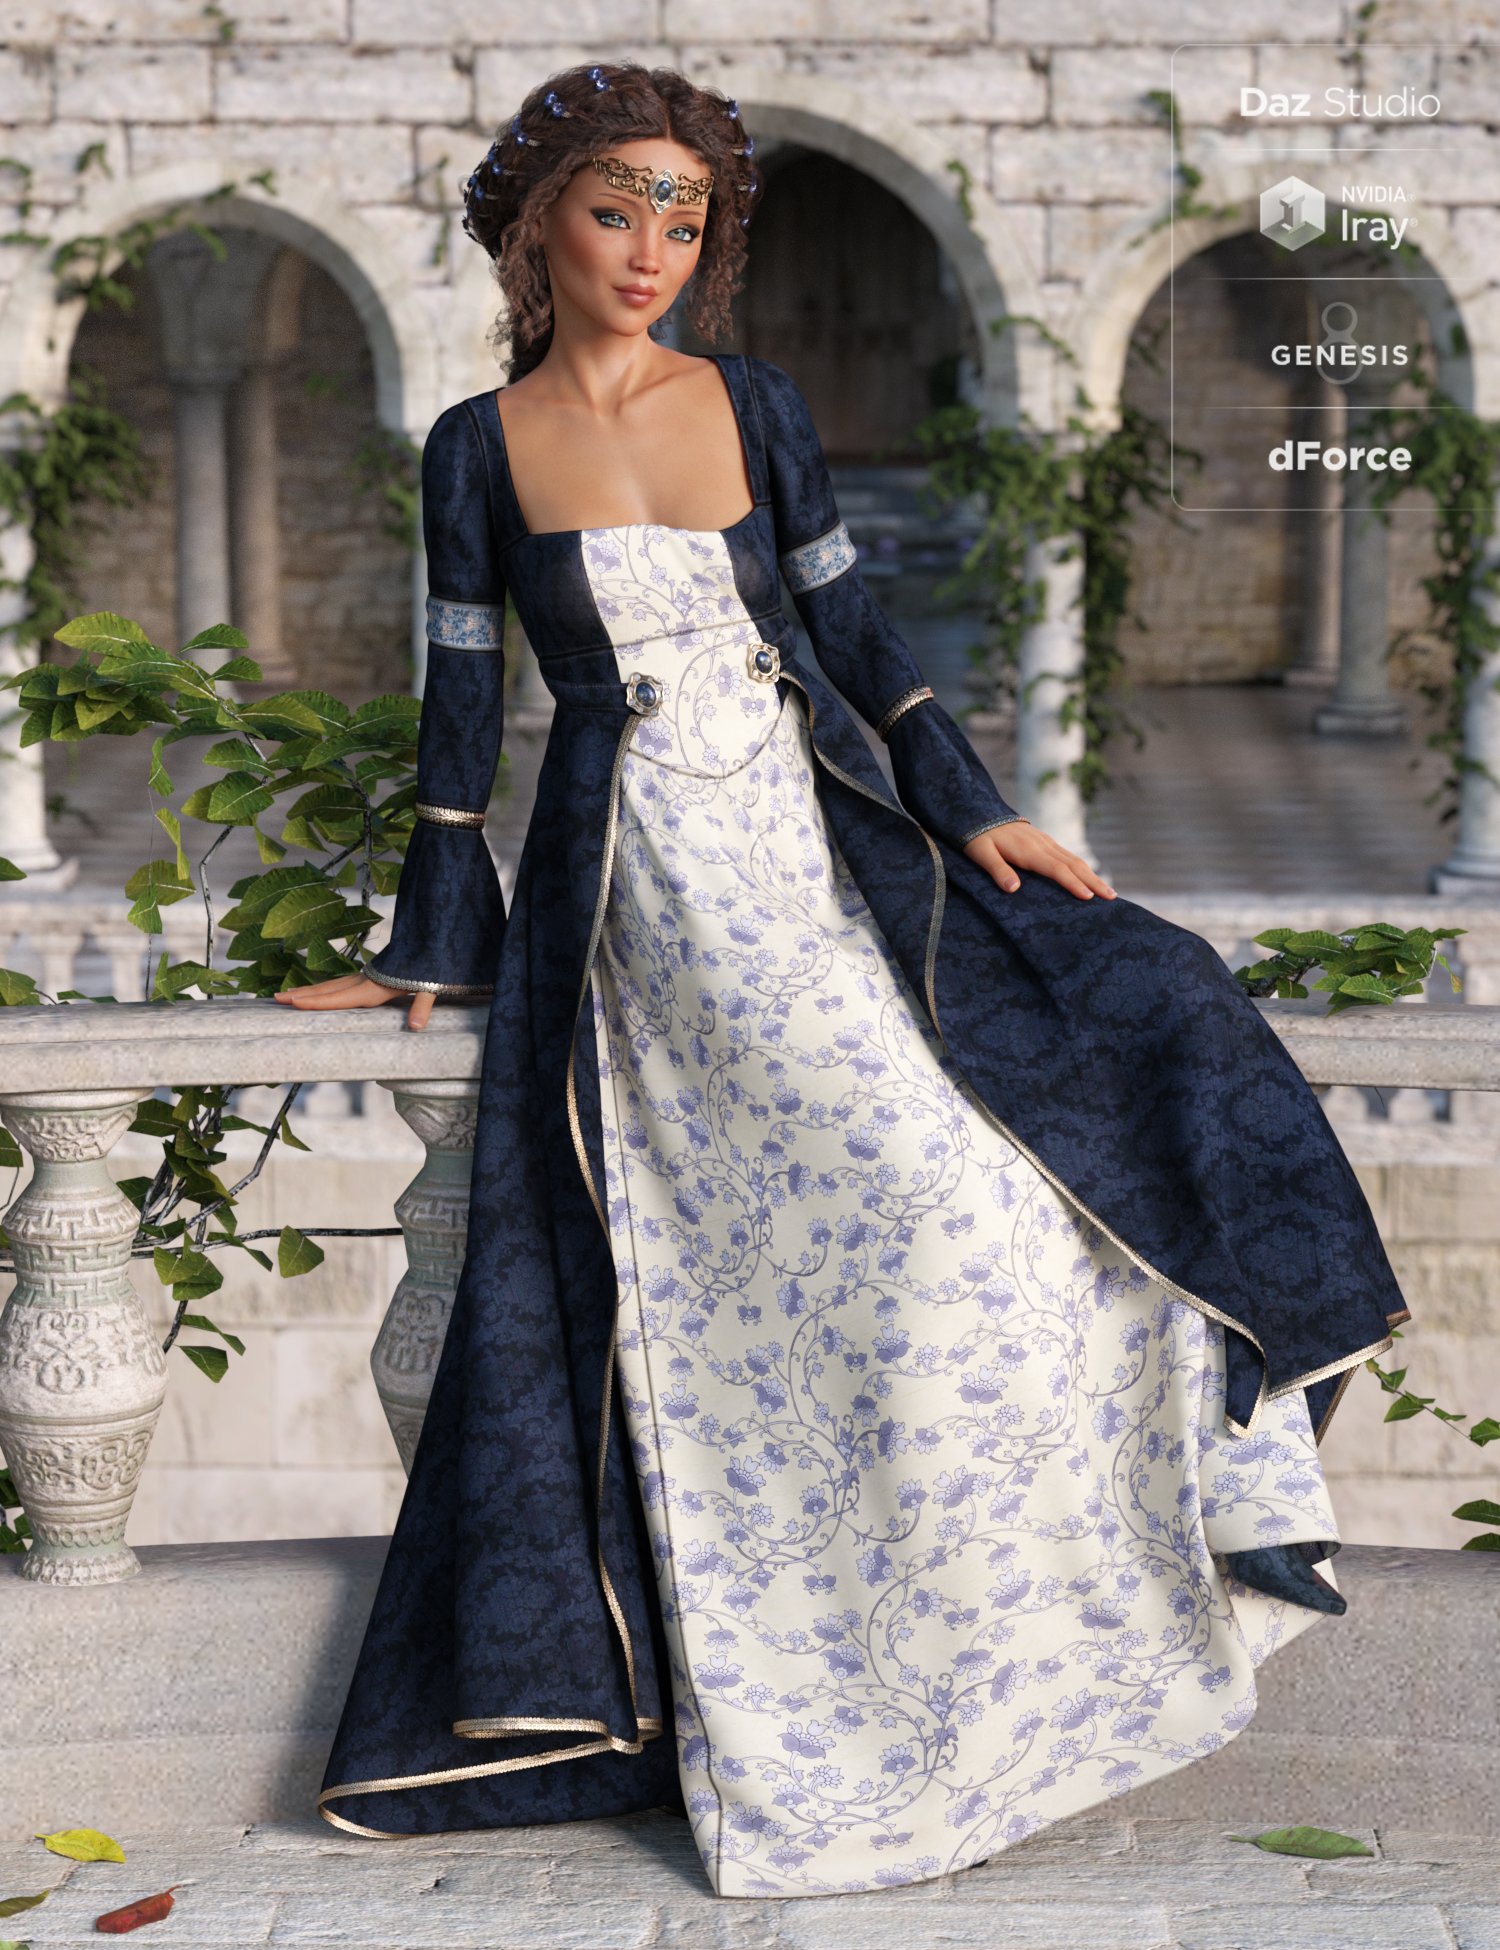 dForce Maiden Princess Outfit for Genesis 8 Female(s) by: ArienNikisatez, 3D Models by Daz 3D